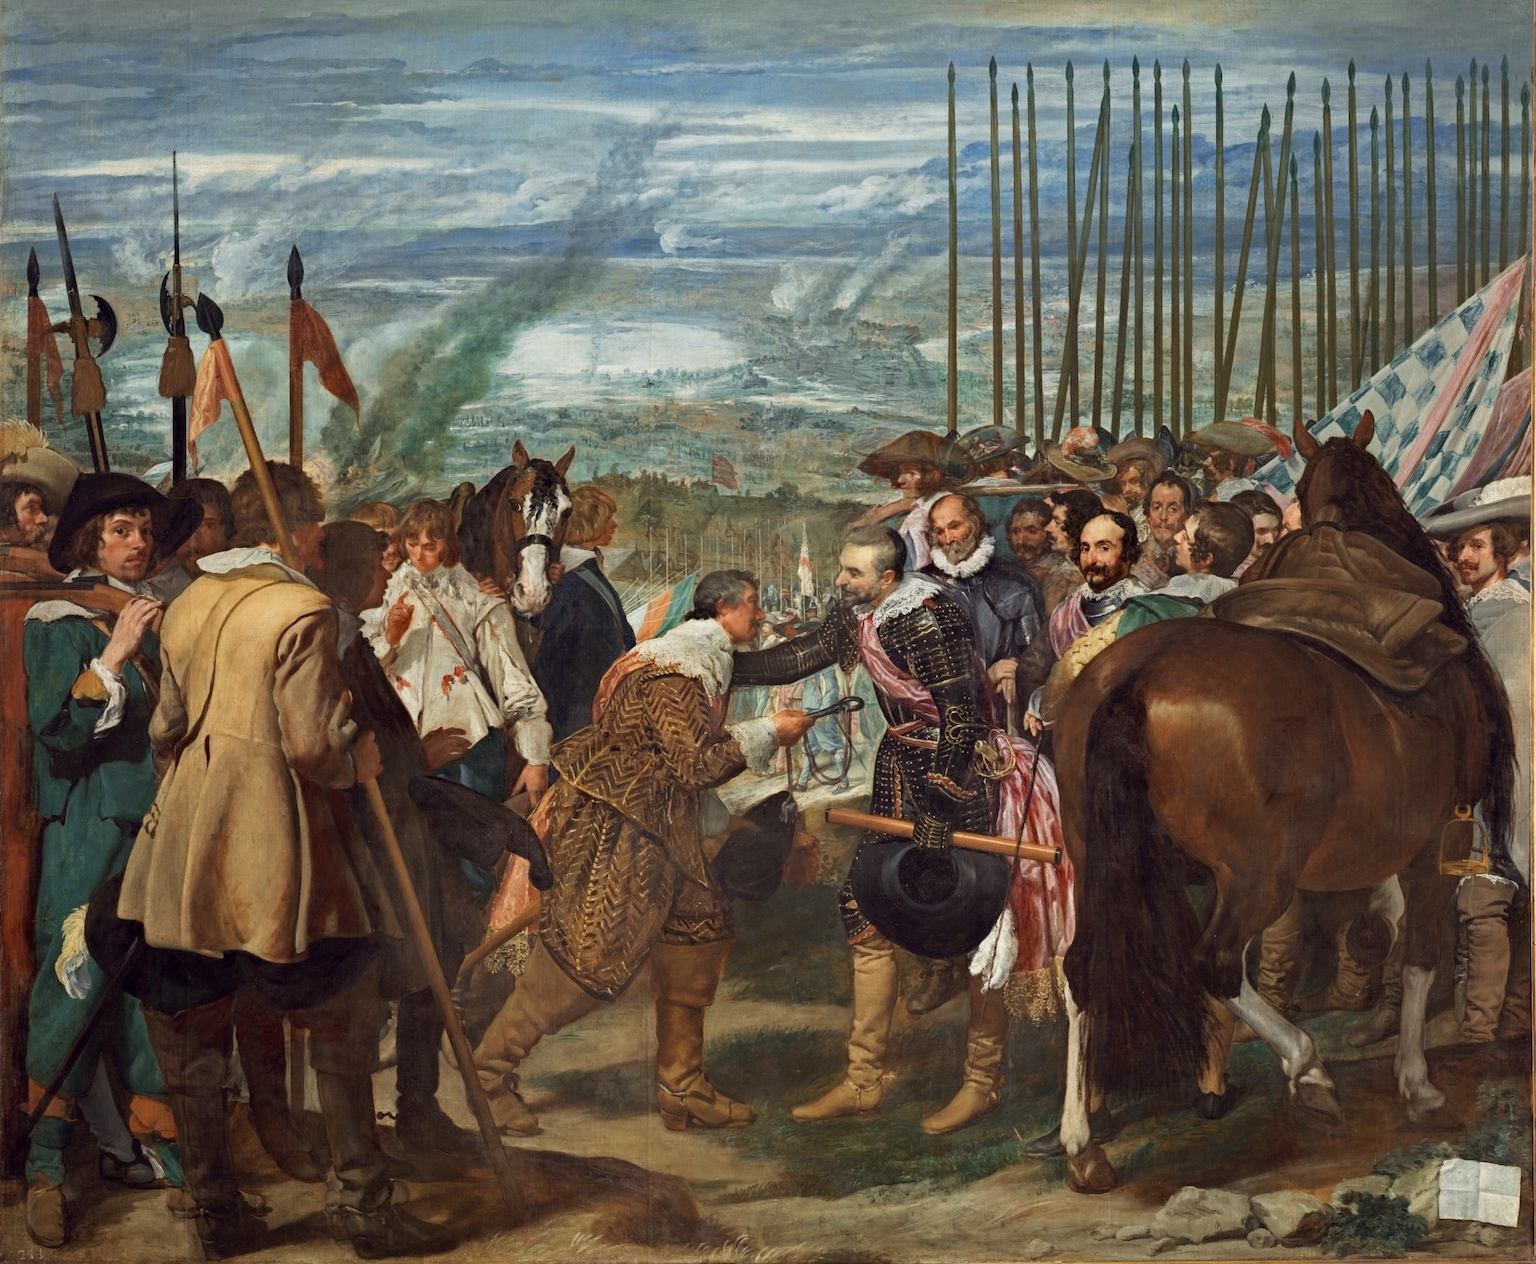 Diego Velázquez, The Surrender of Breda, 1634–35, oil on canvas, 307 cm × 367 cm (Museo del Prado, Madrid)